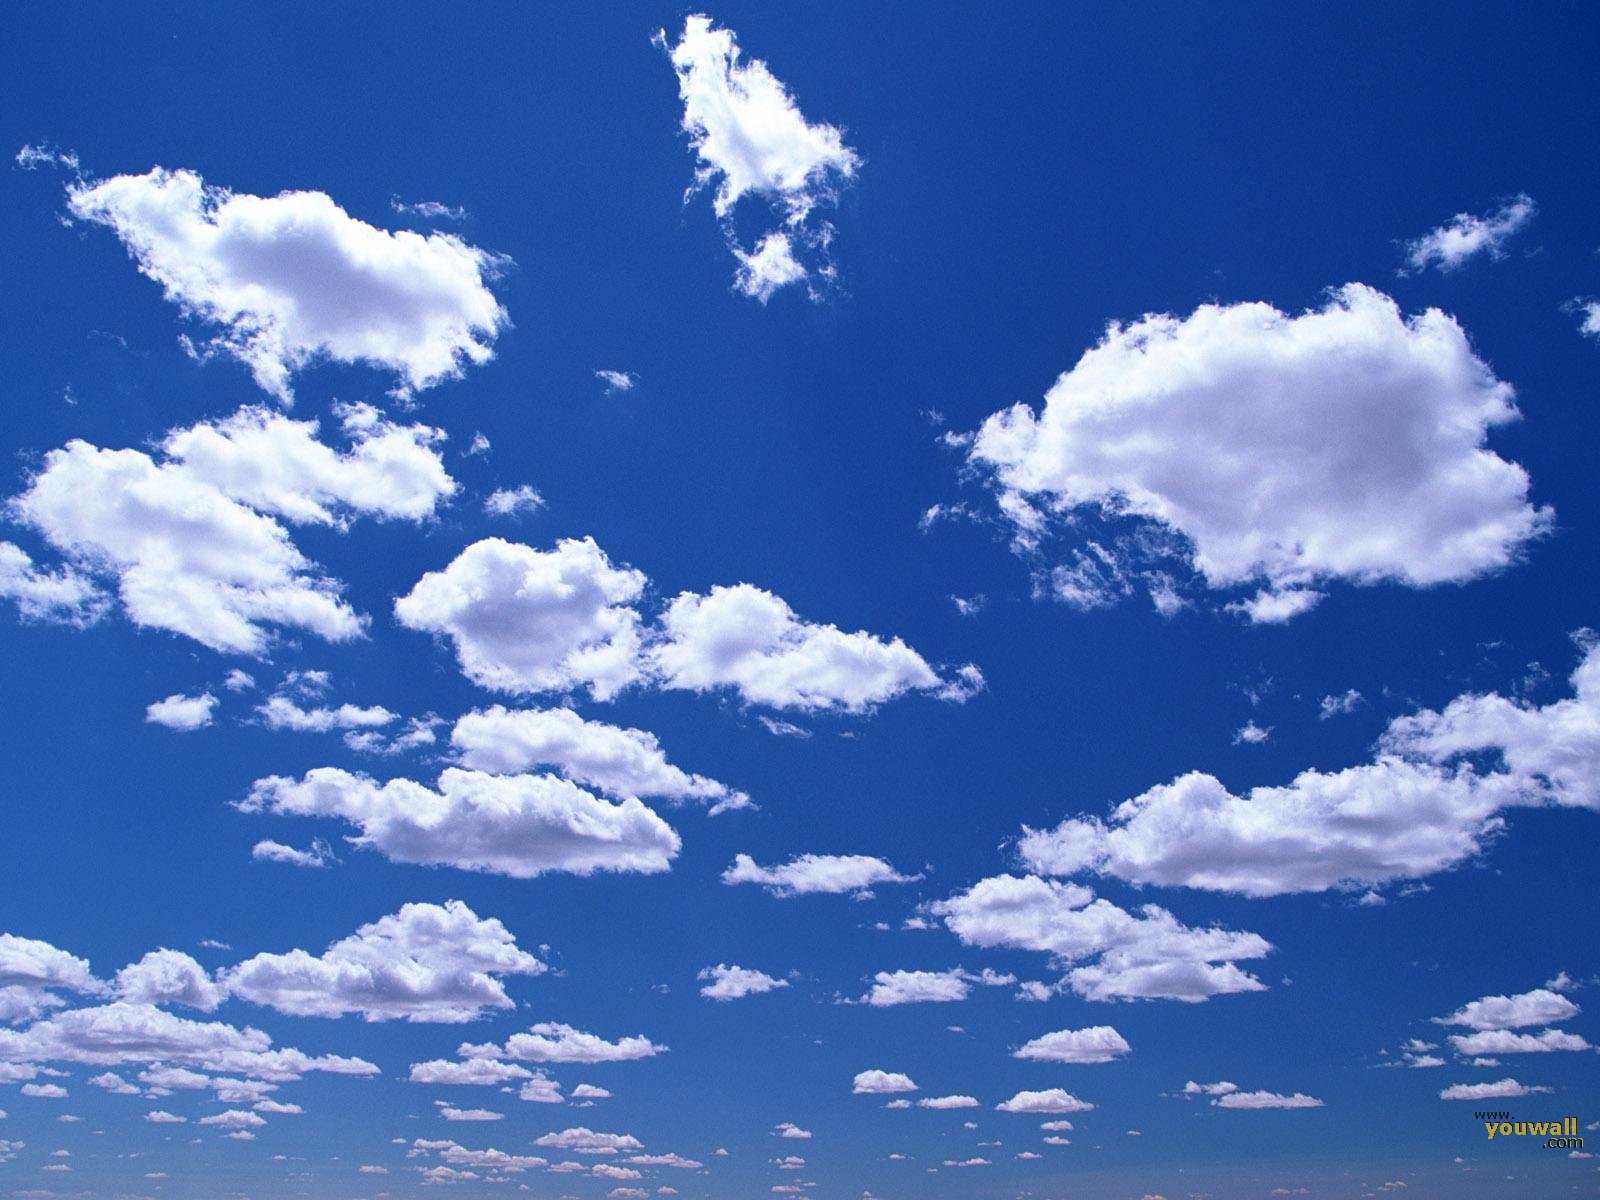 YouWall   Cloud Sky Wallpaper   wallpaperwallpapersfree wallpaper